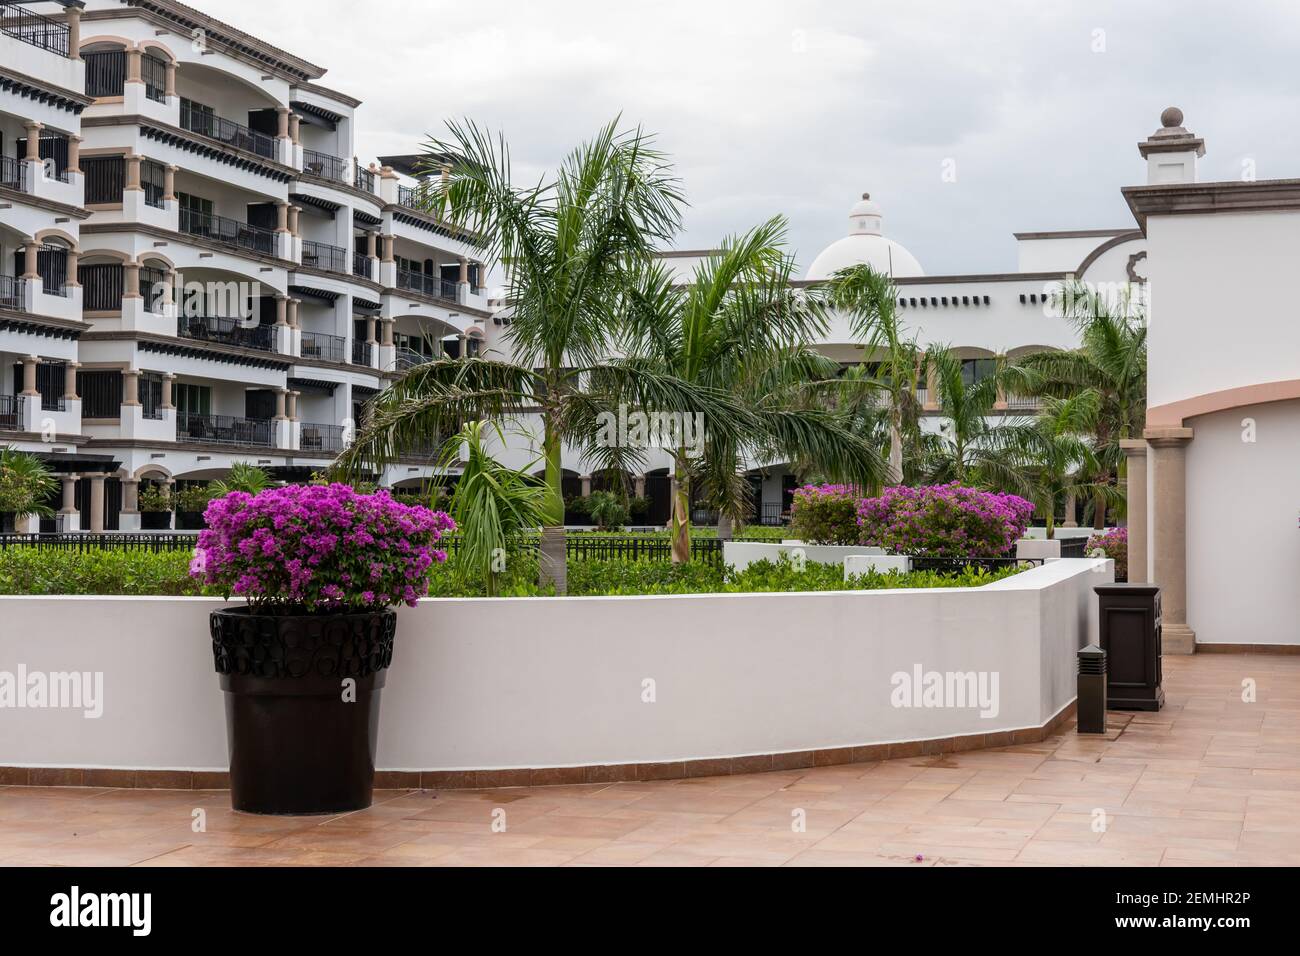 Hacienda-style architecture reflects Hispanic heritage at Grand Residences Riviera Cancun Stock Photo